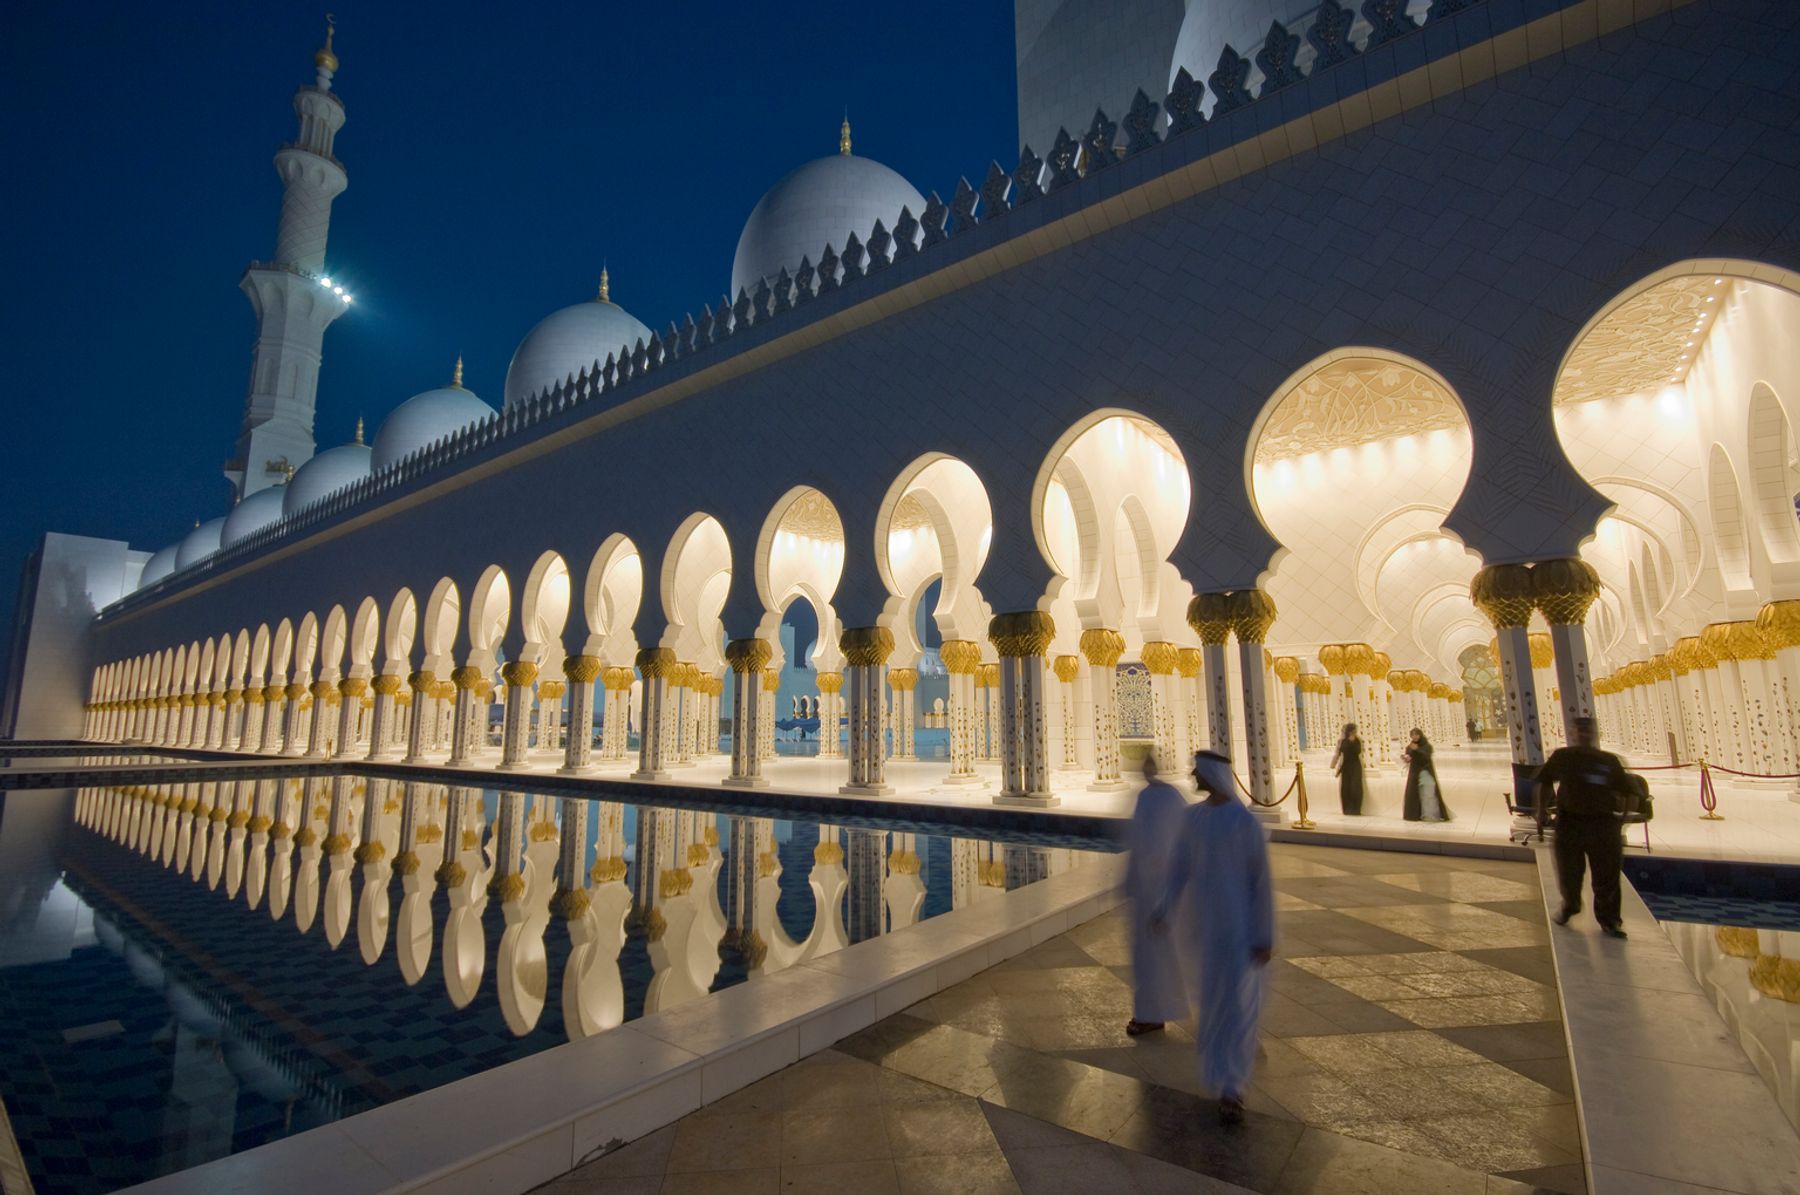 Mezquita Sheikh Zayed bin Sultan Al Nahyan, Abu Dhabi. Arquitectura: Yusef Abdelki (proyecto), Halcrow, Dubai Office (ejecución). Interiorismo: Spatium Architects, Milán. Proyecto de iluminación: Speirs and Major Associates, Edimburgo.